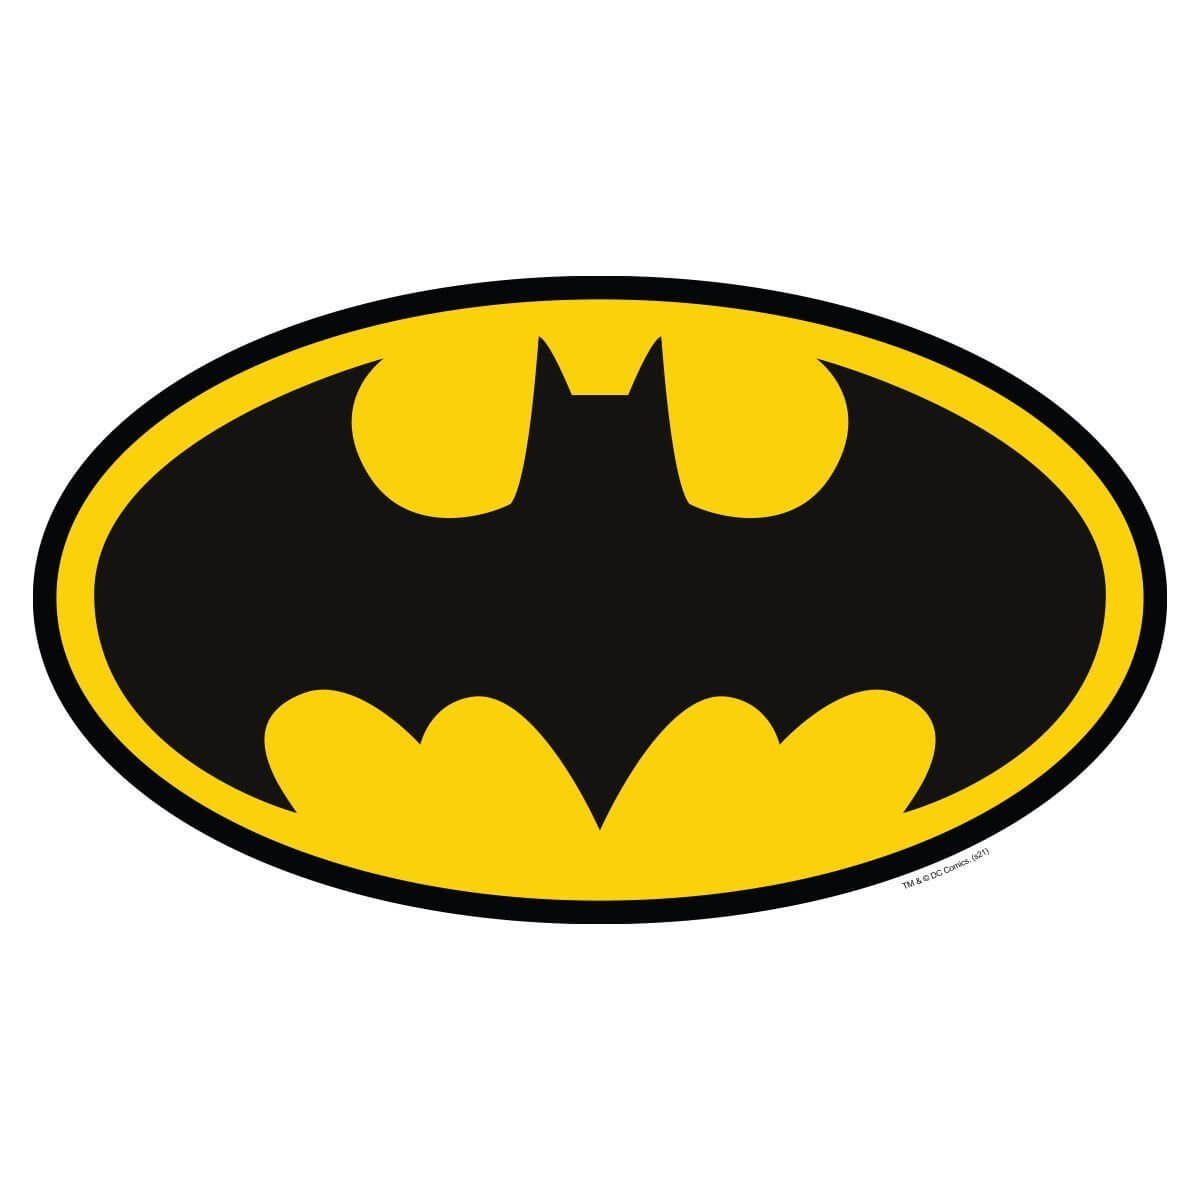 kismet-decals-batman-logo-licensed-wall-sticker-easy-diy-justice-league-home-room-decor-wall-art-666400.jpg